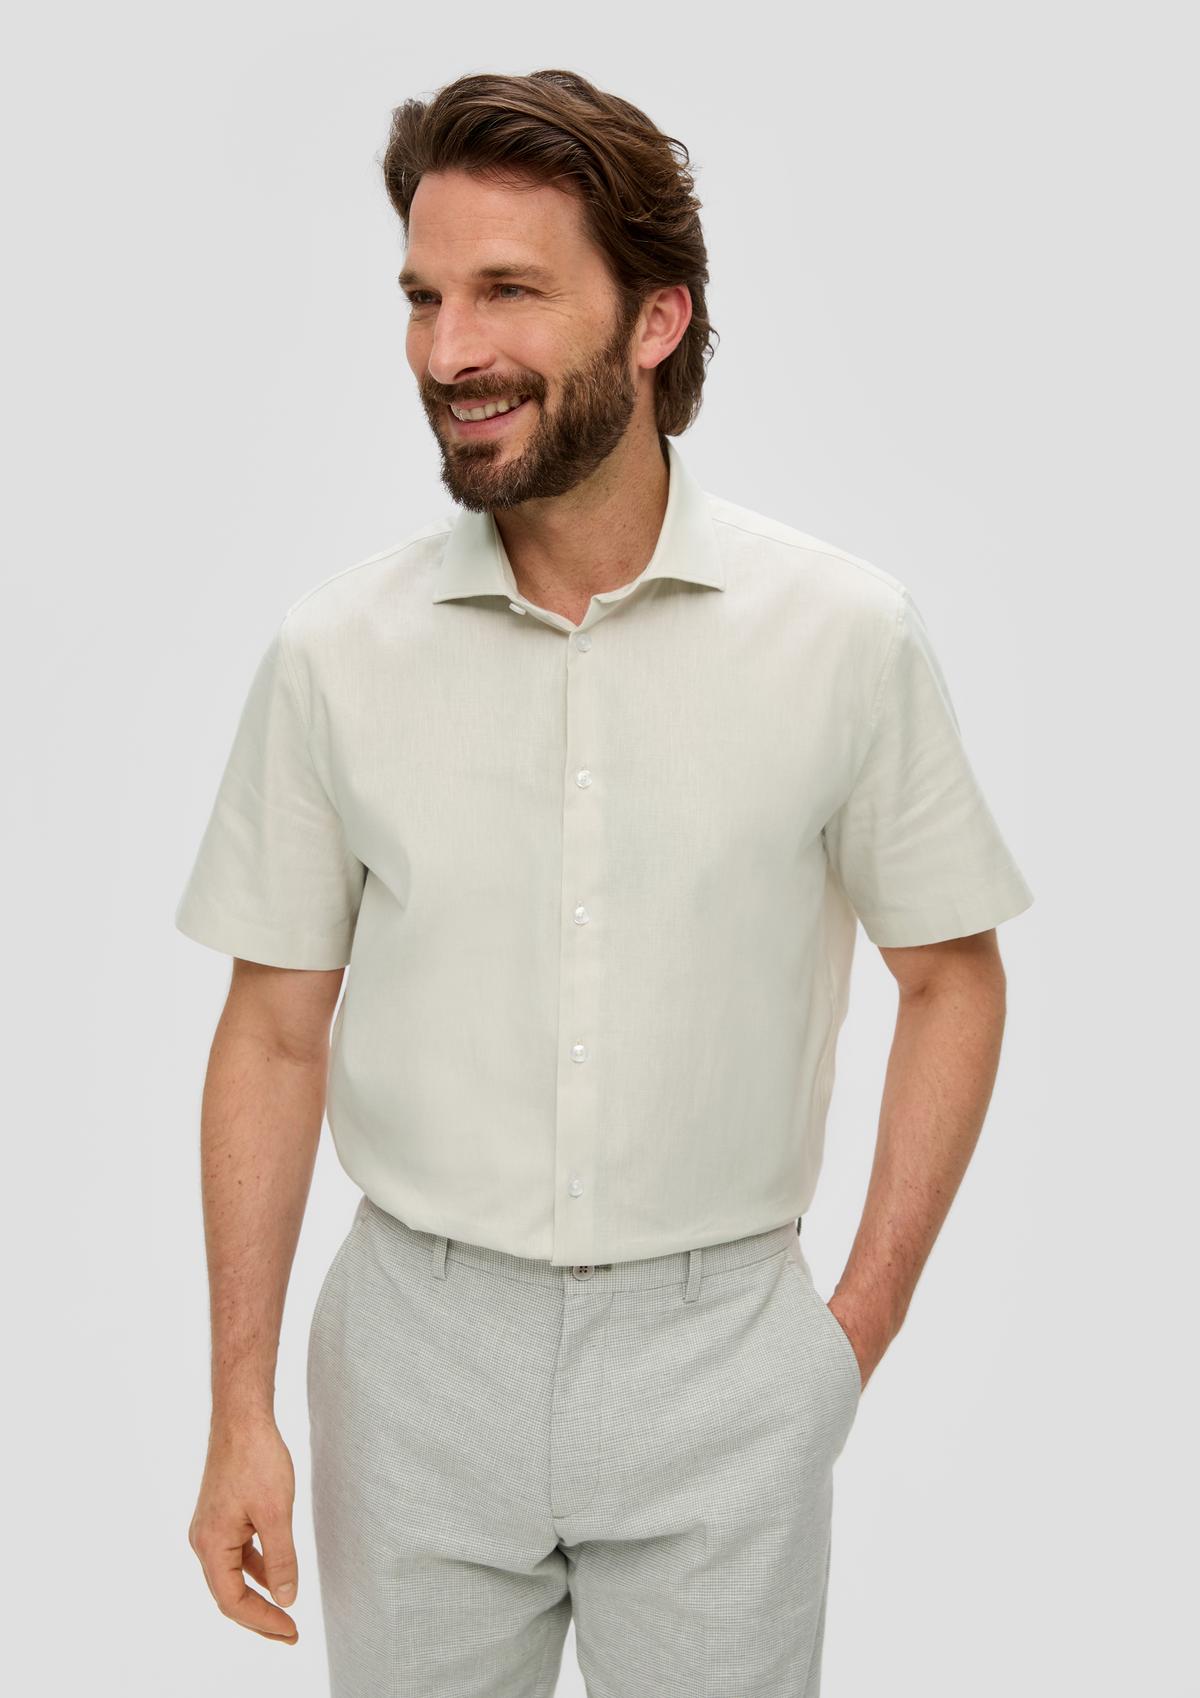 Short sleeve shirt in a cotton and linen blend